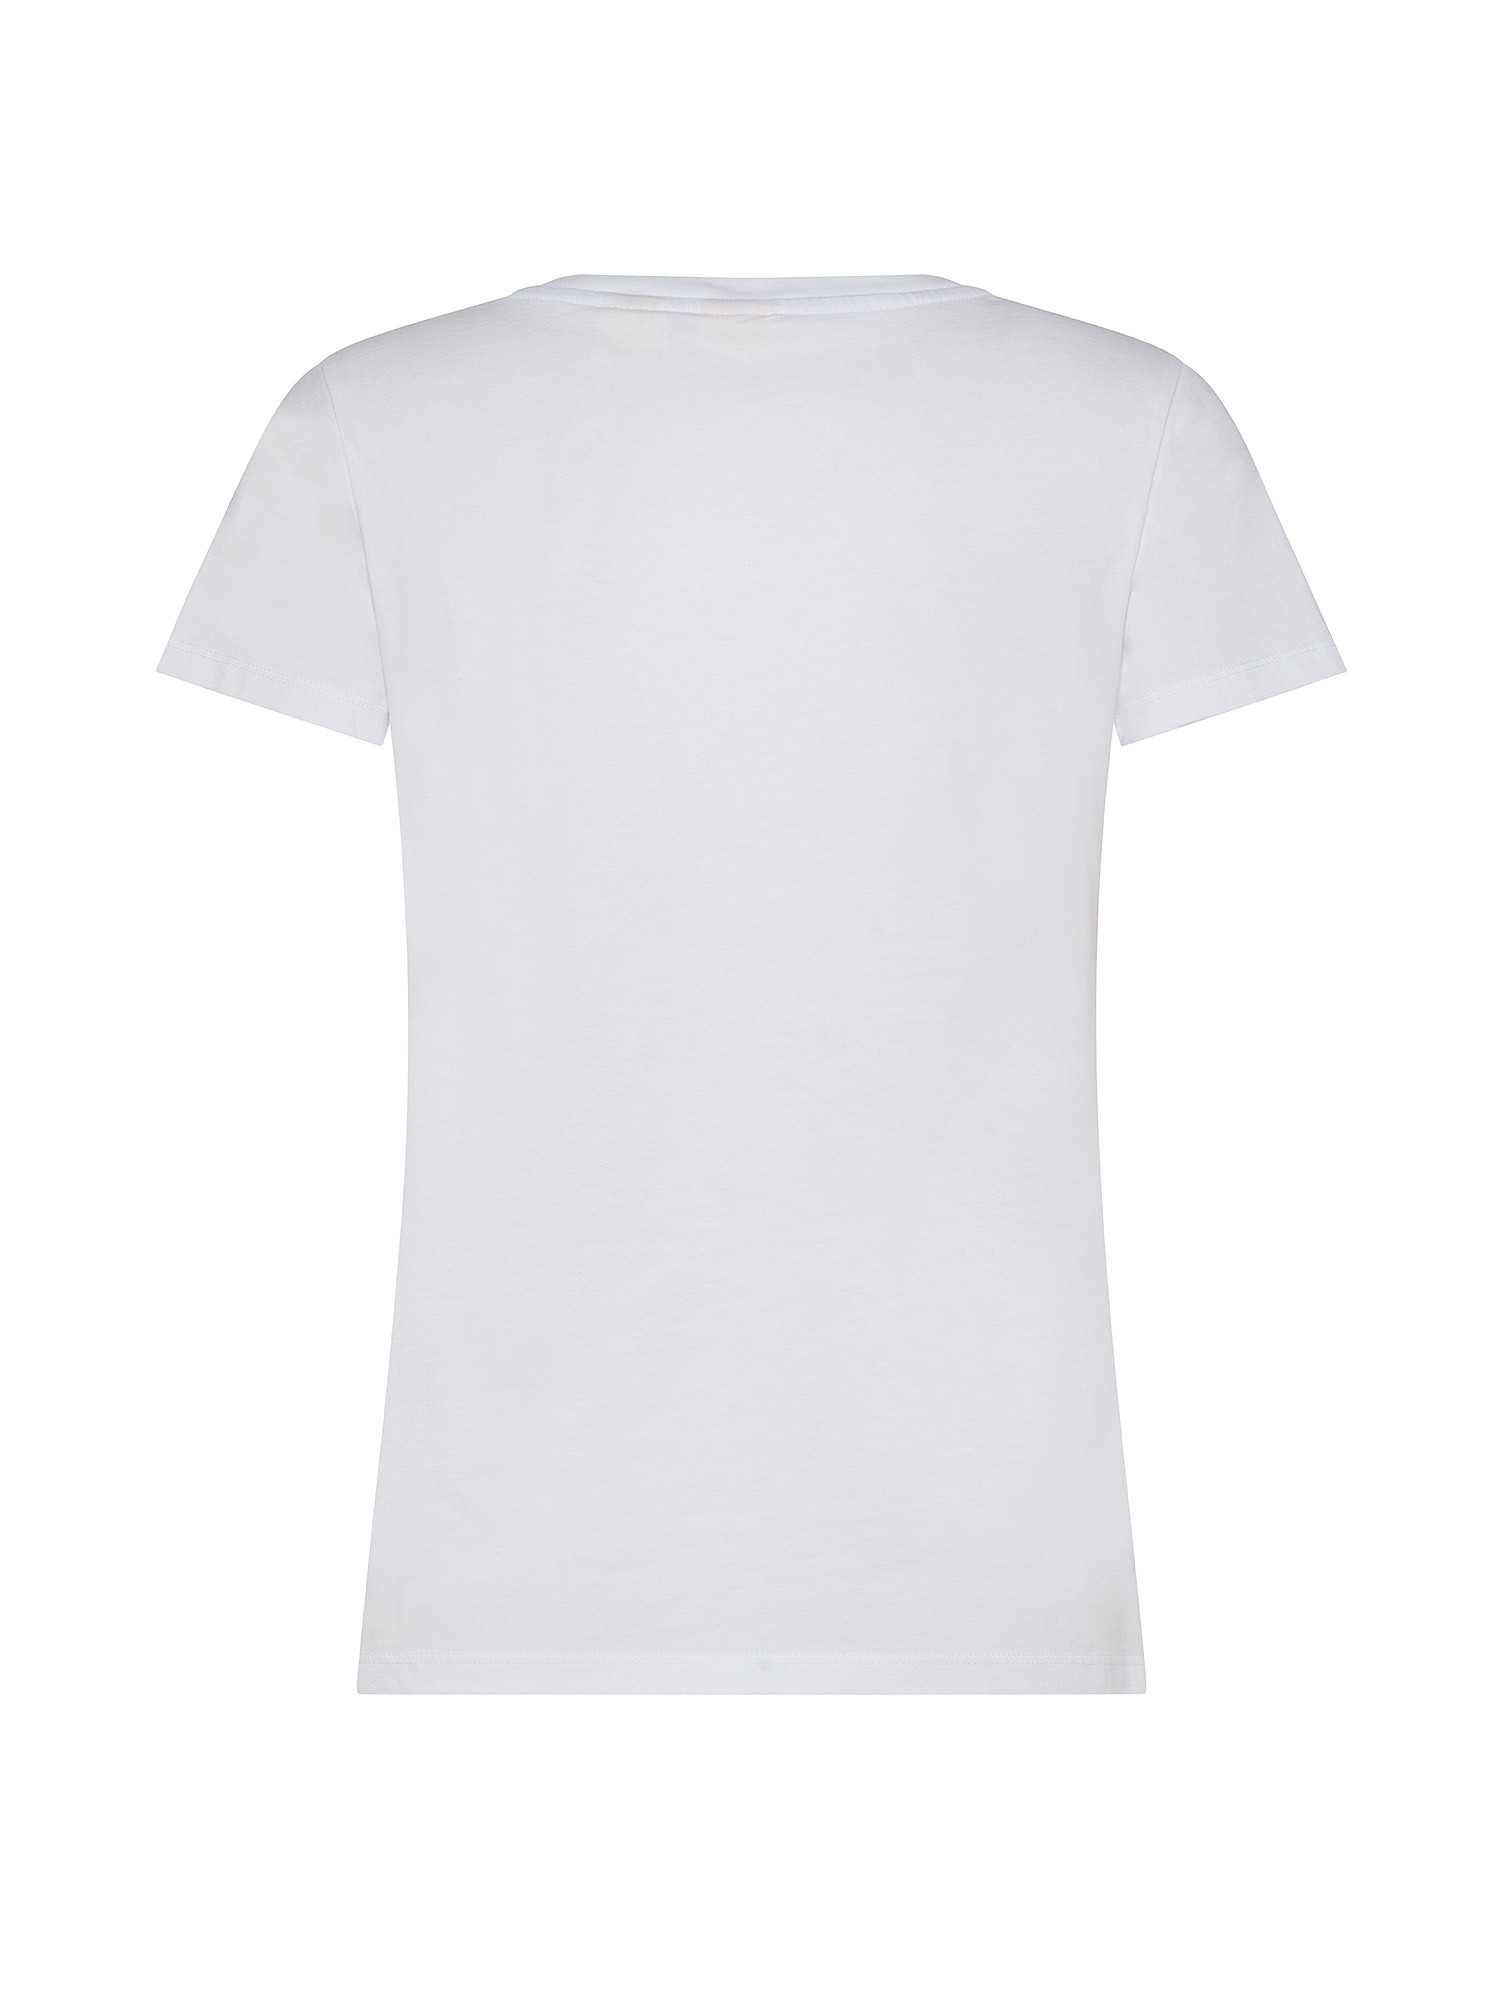 Levi's Logo V-Neck T-Shirt, White, large image number 1